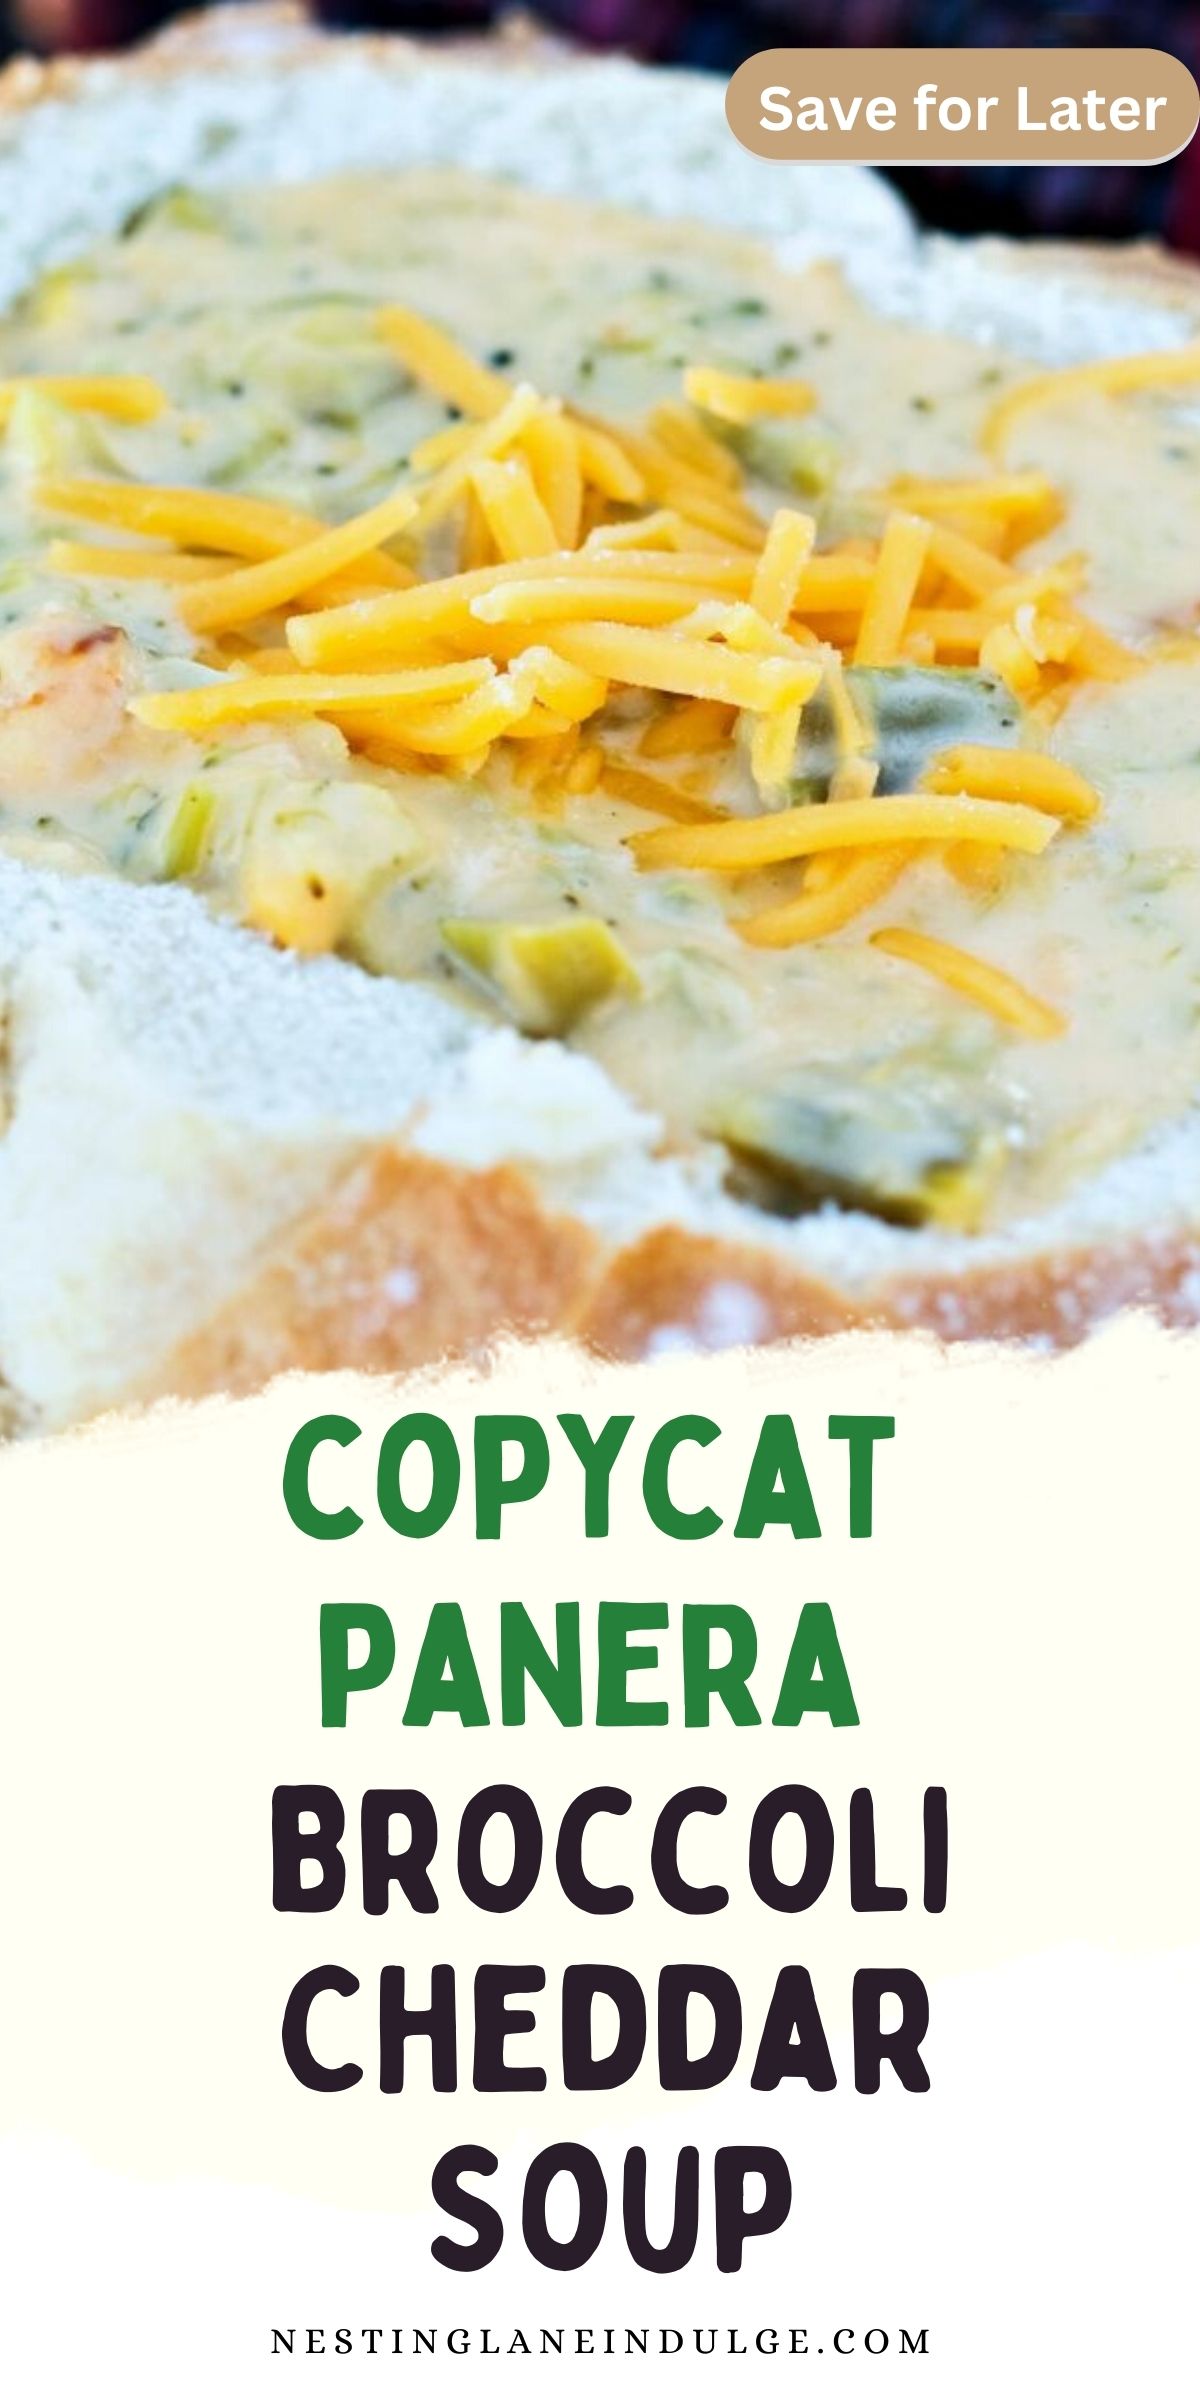 Broccoli Cheddar Soup (Panera Copycat) Graphic